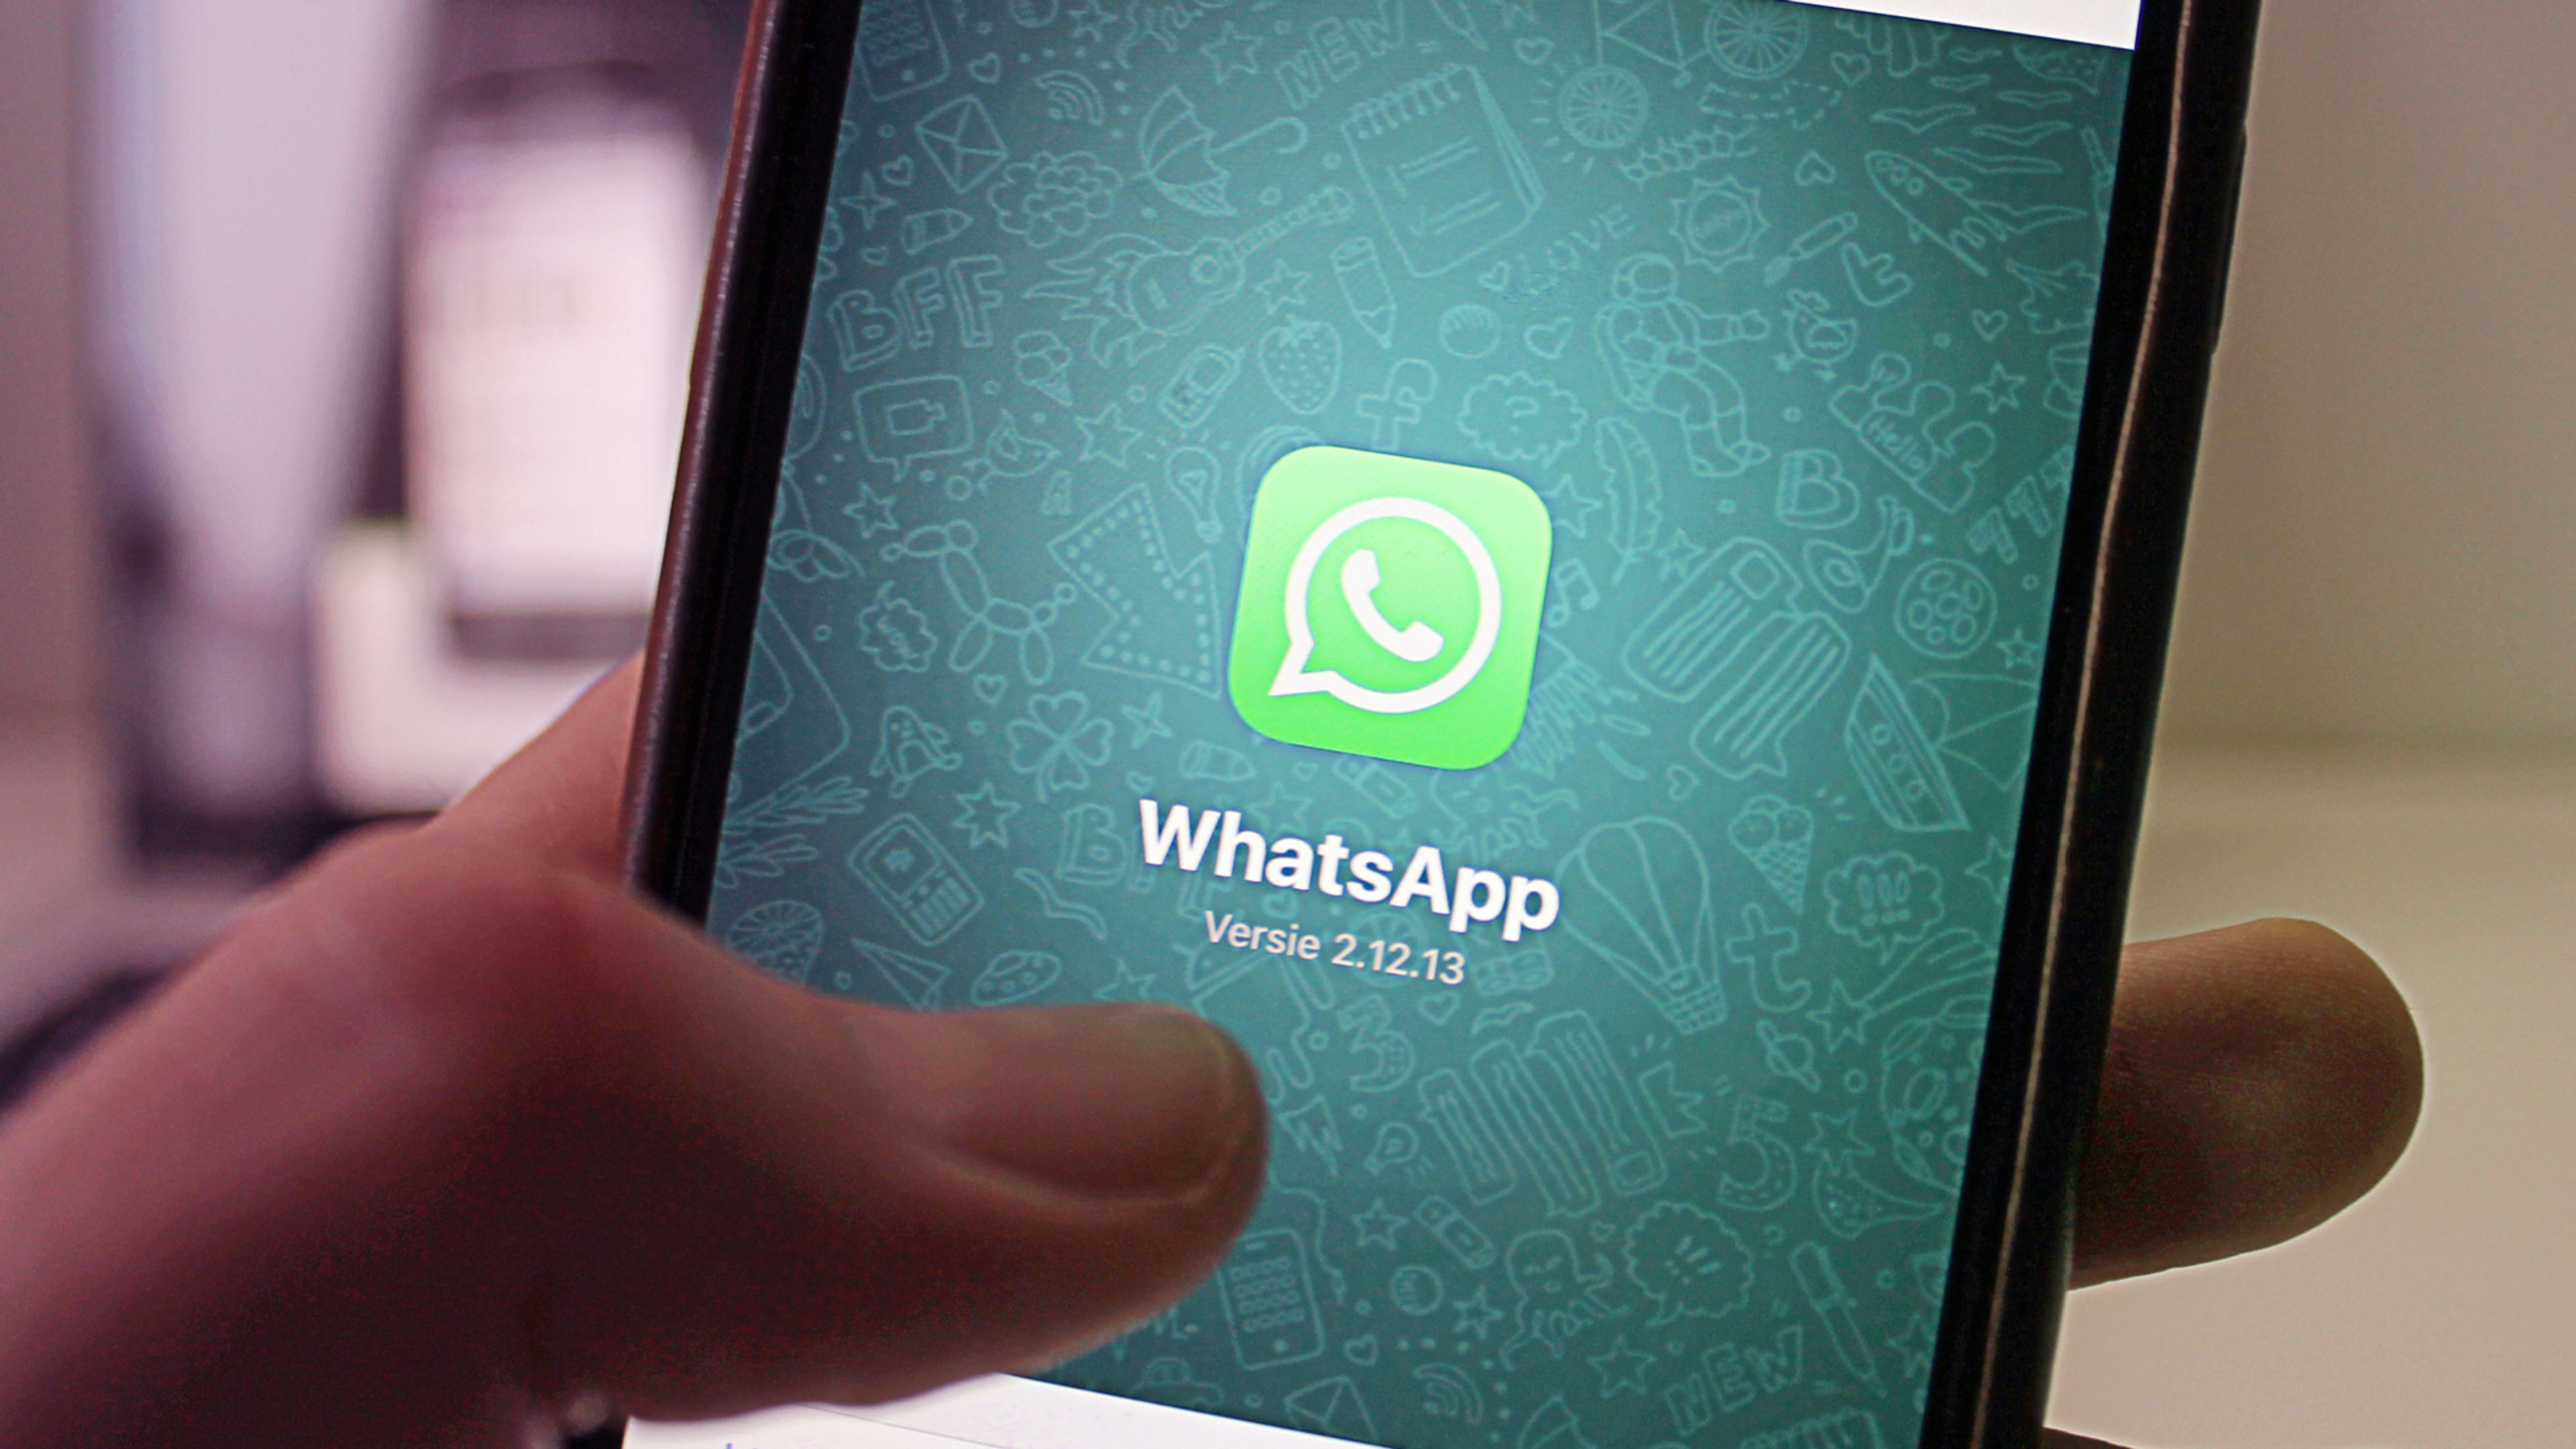 WhatsApp is running ads in India to combat fake news